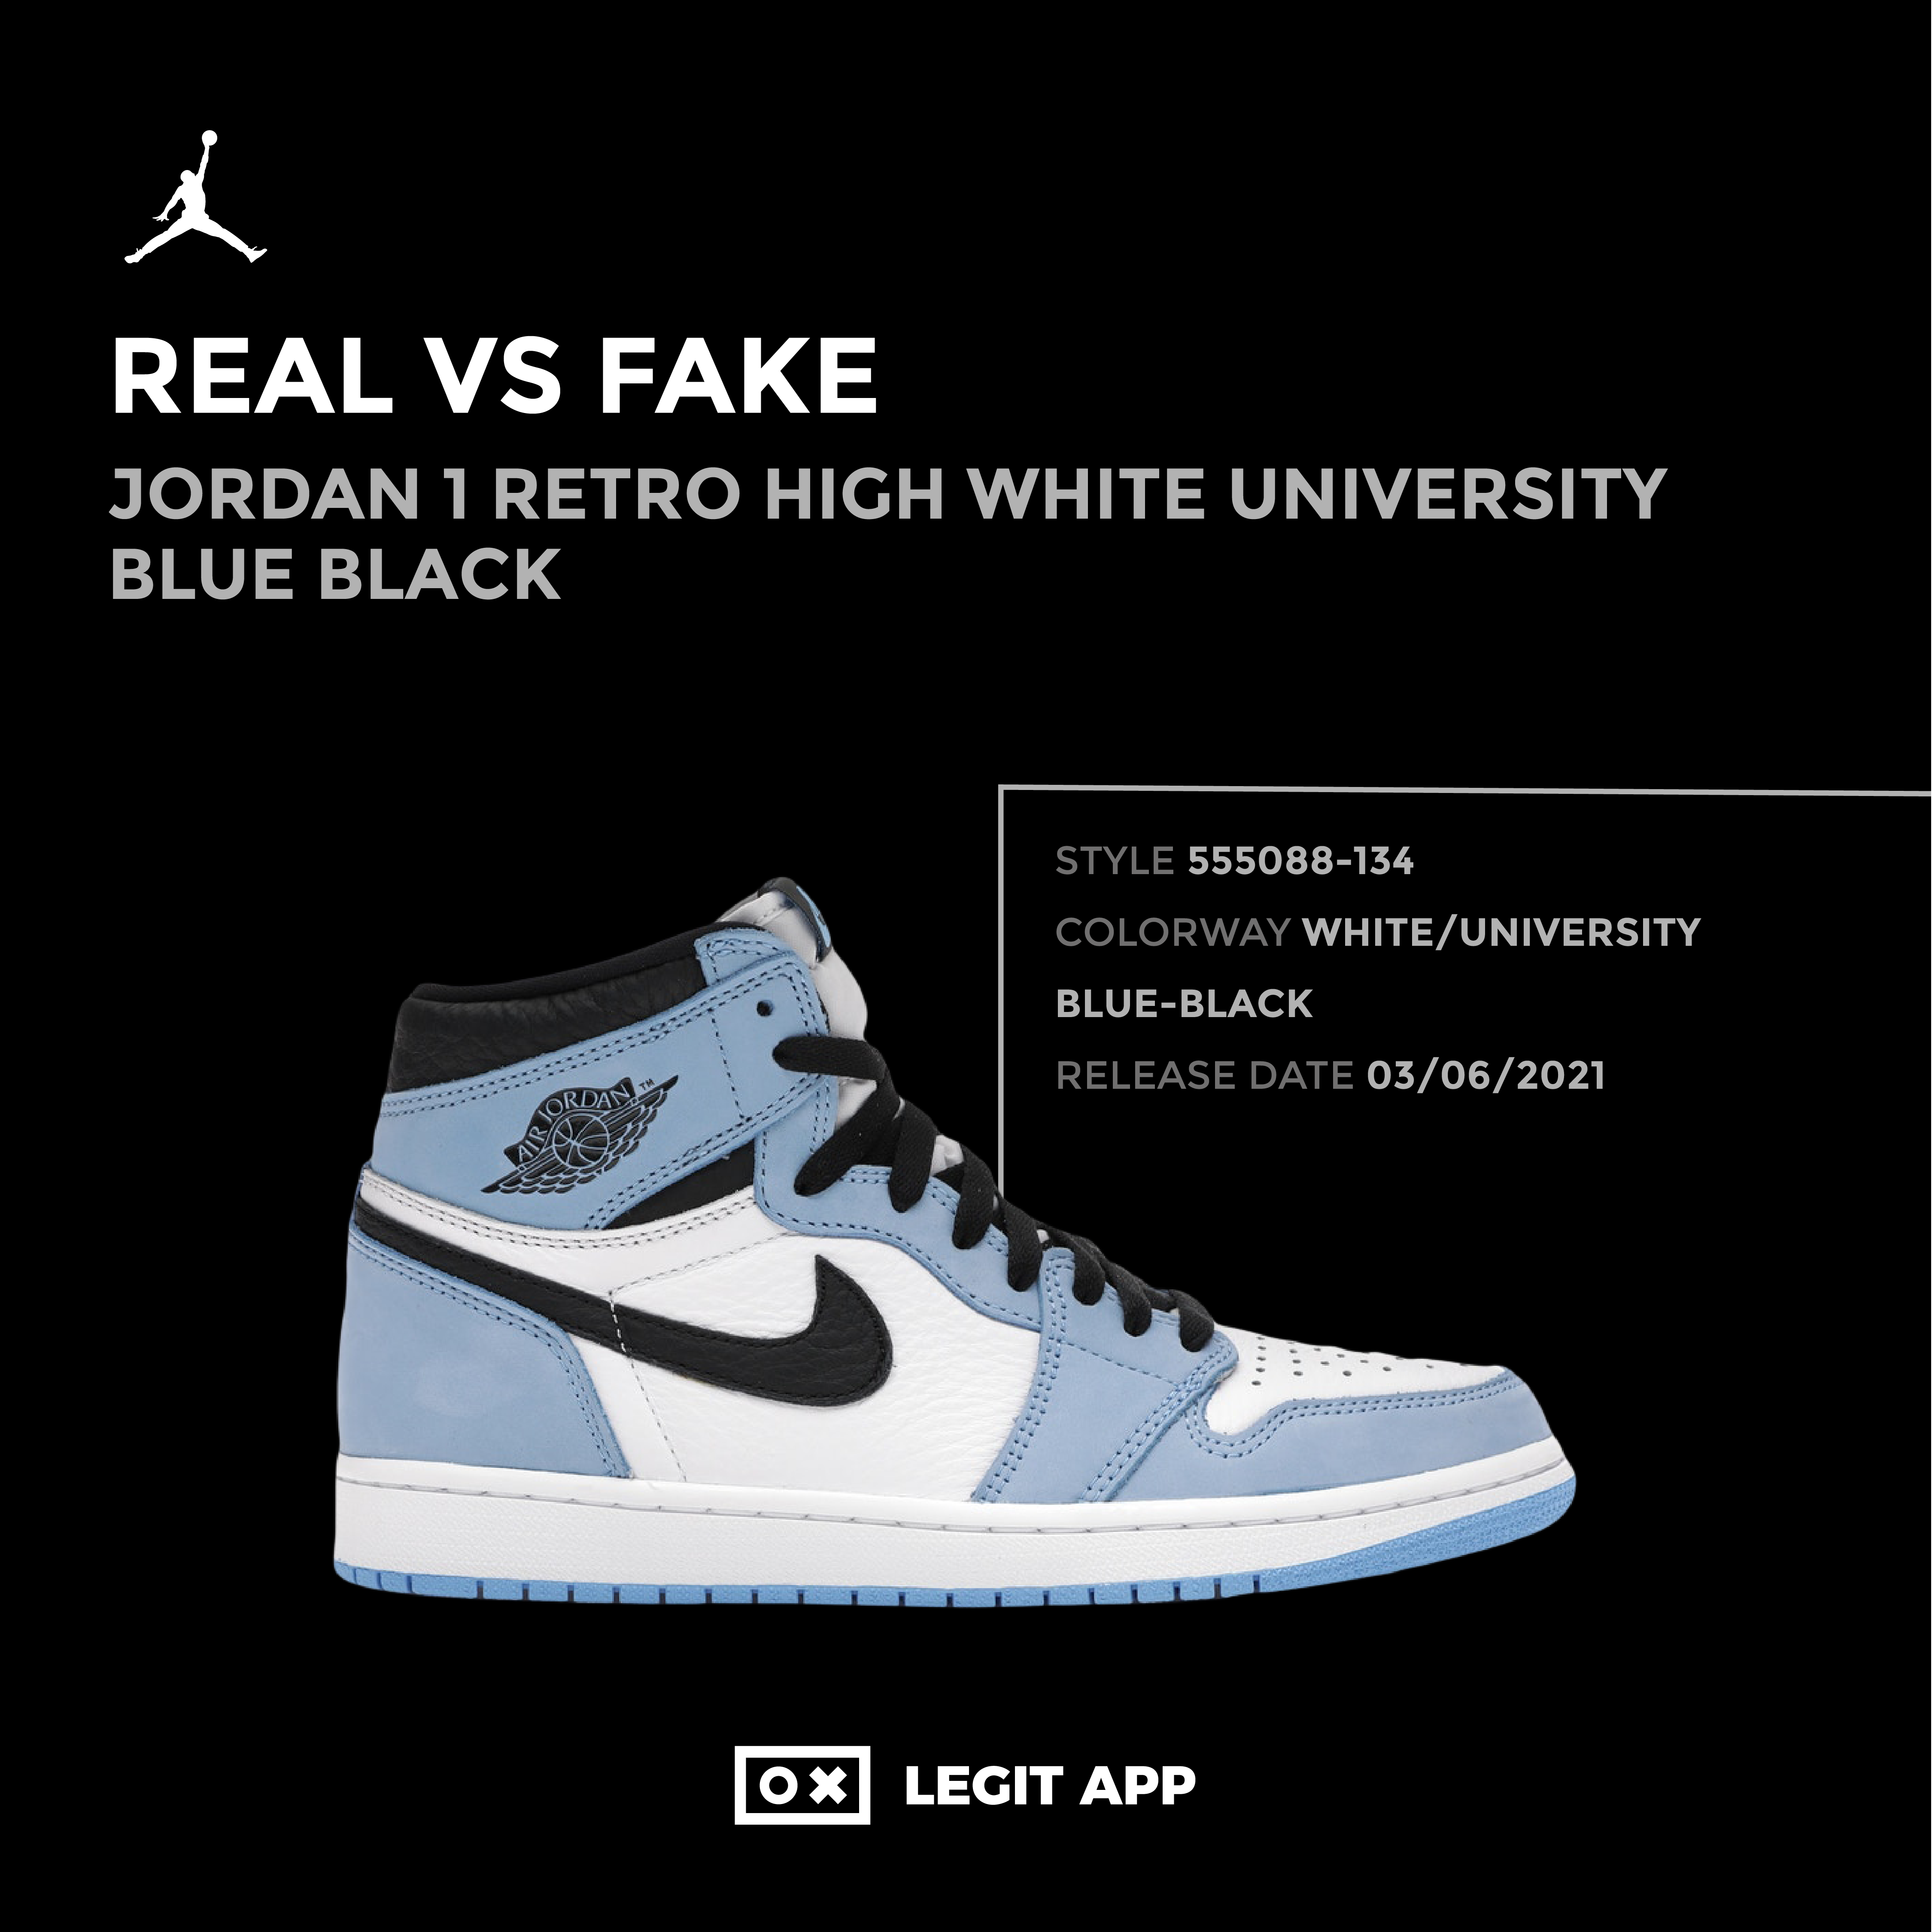 fake vs real jordan 1 university blue